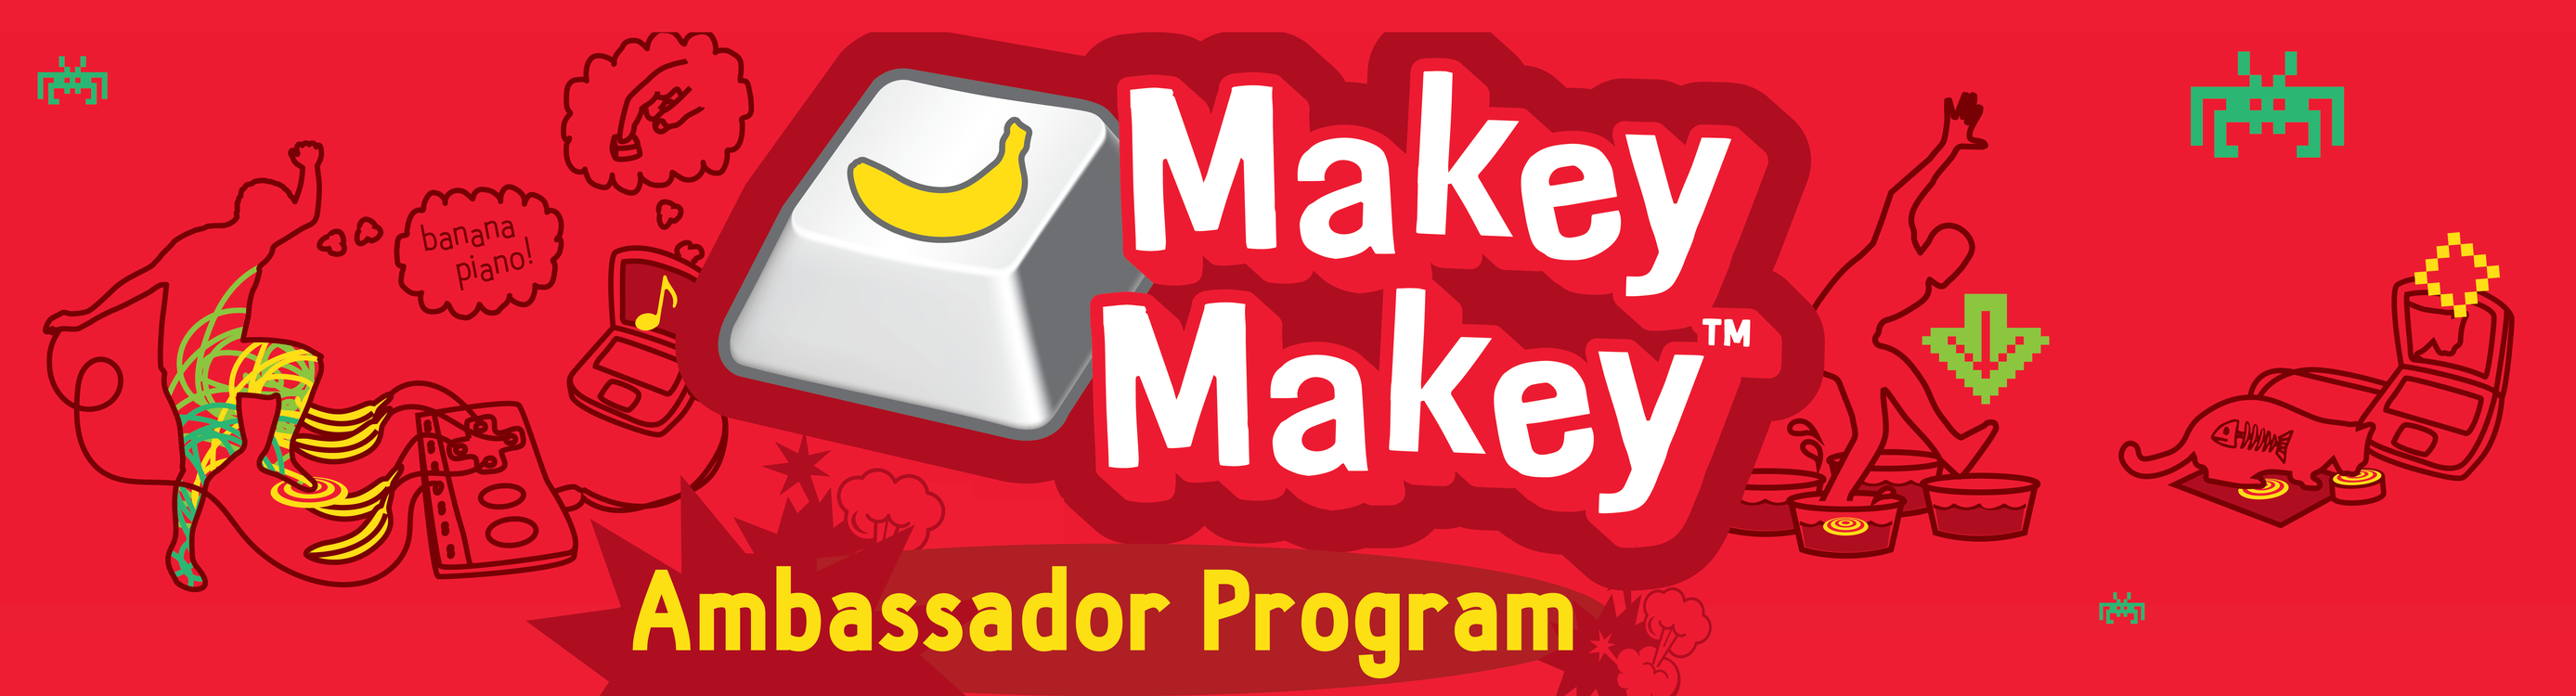 2018-2019 Makey Makey Ambassador Program: Application Window Open!